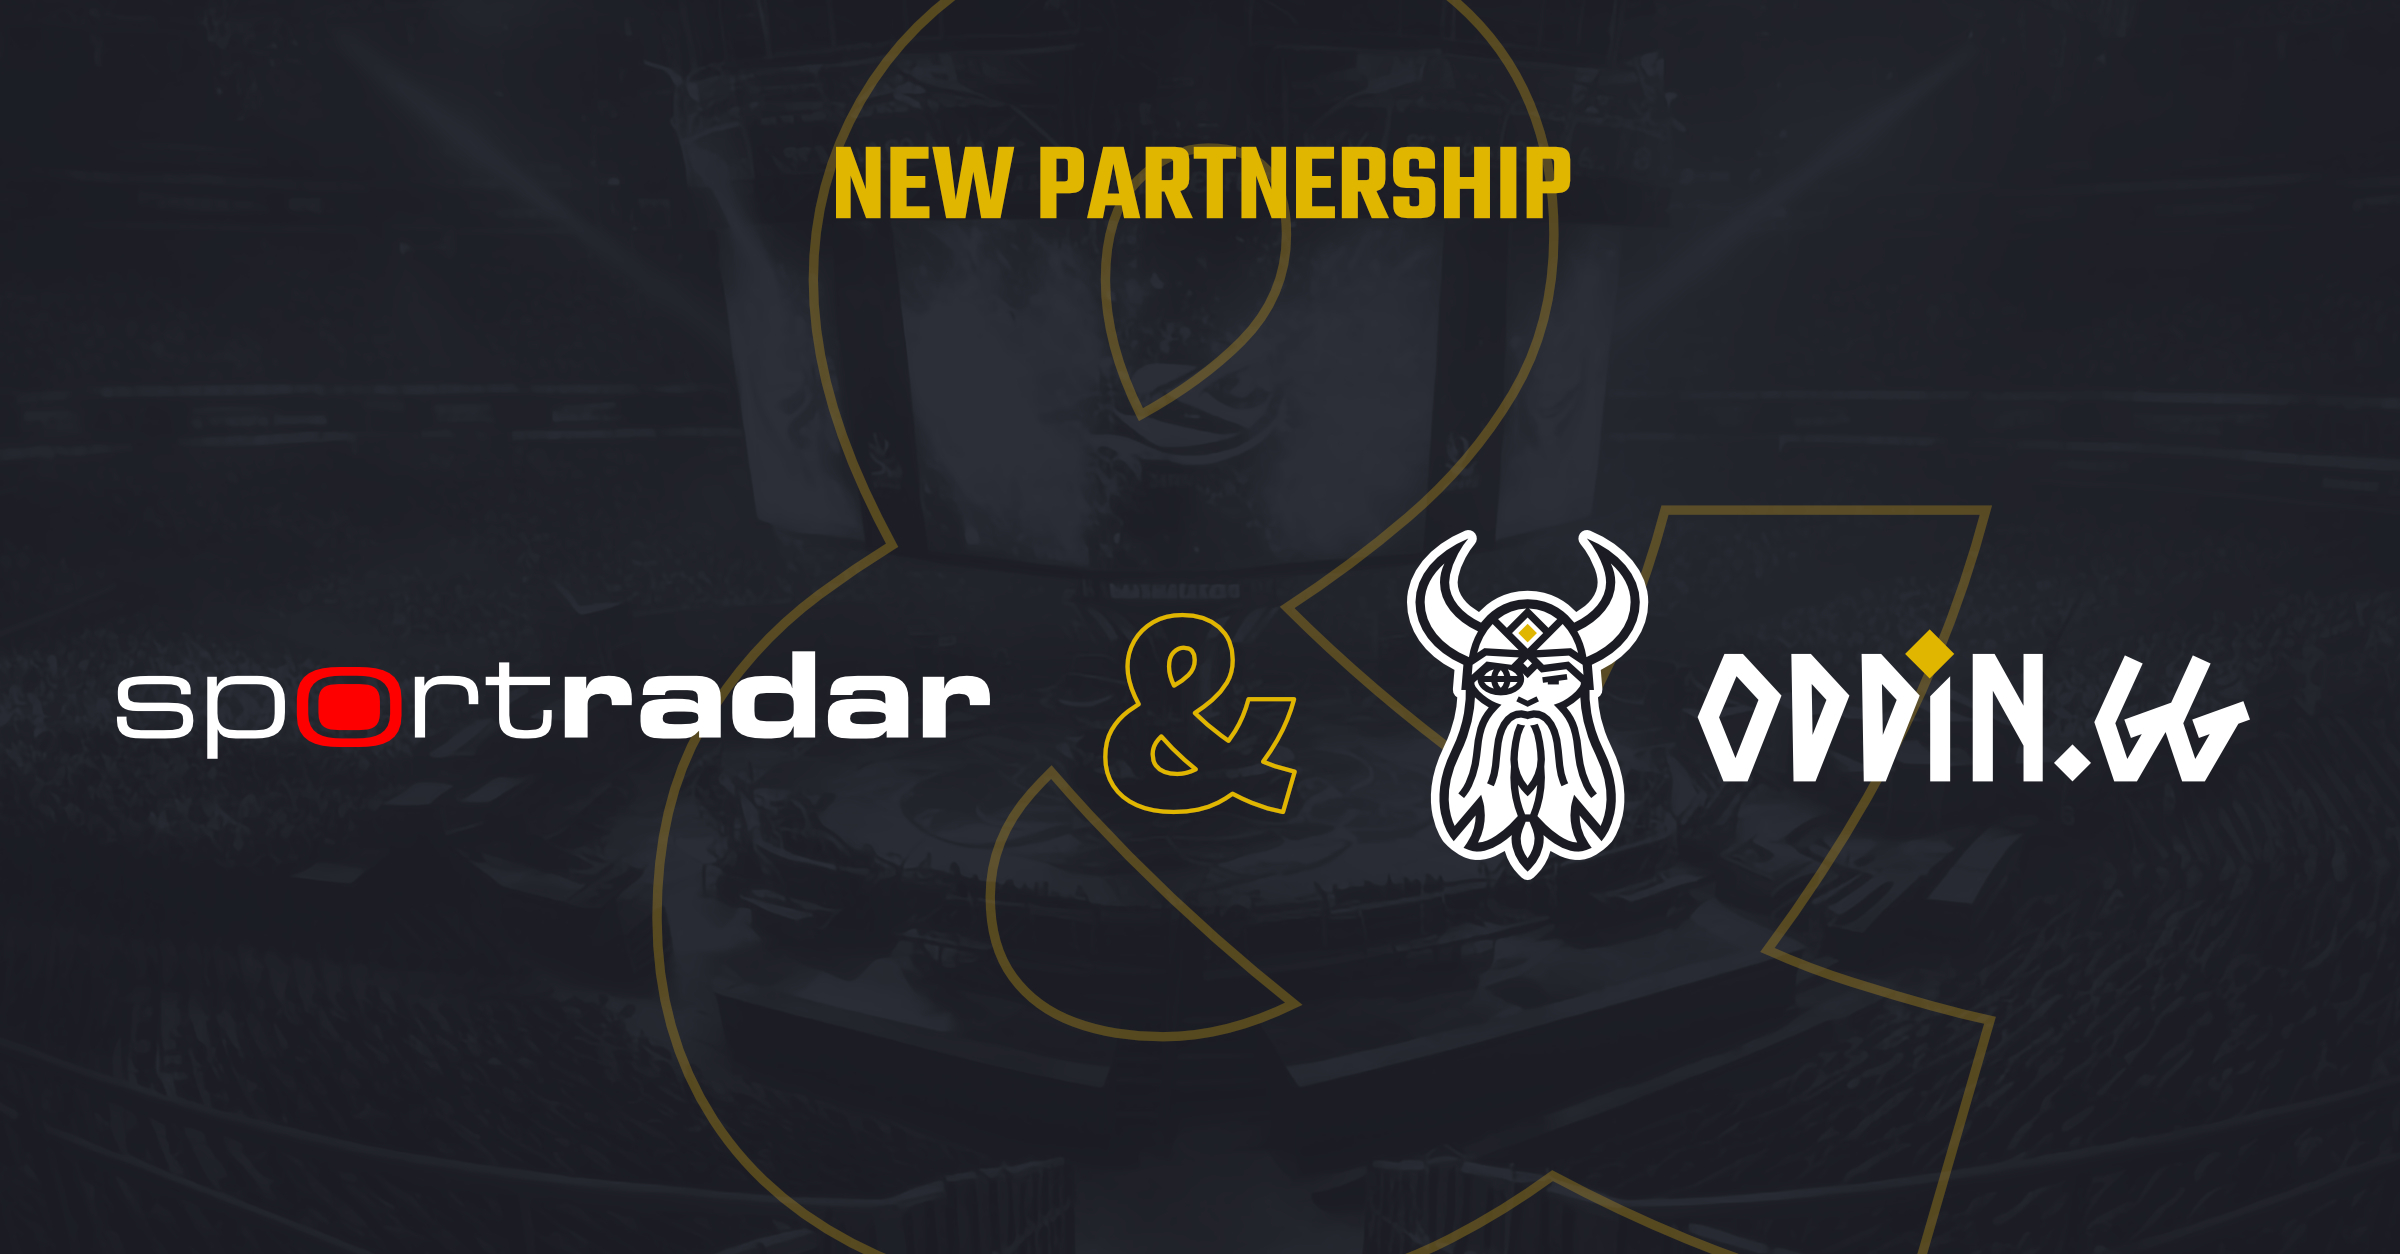 Oddin Sportradar Partnership Announcement banner